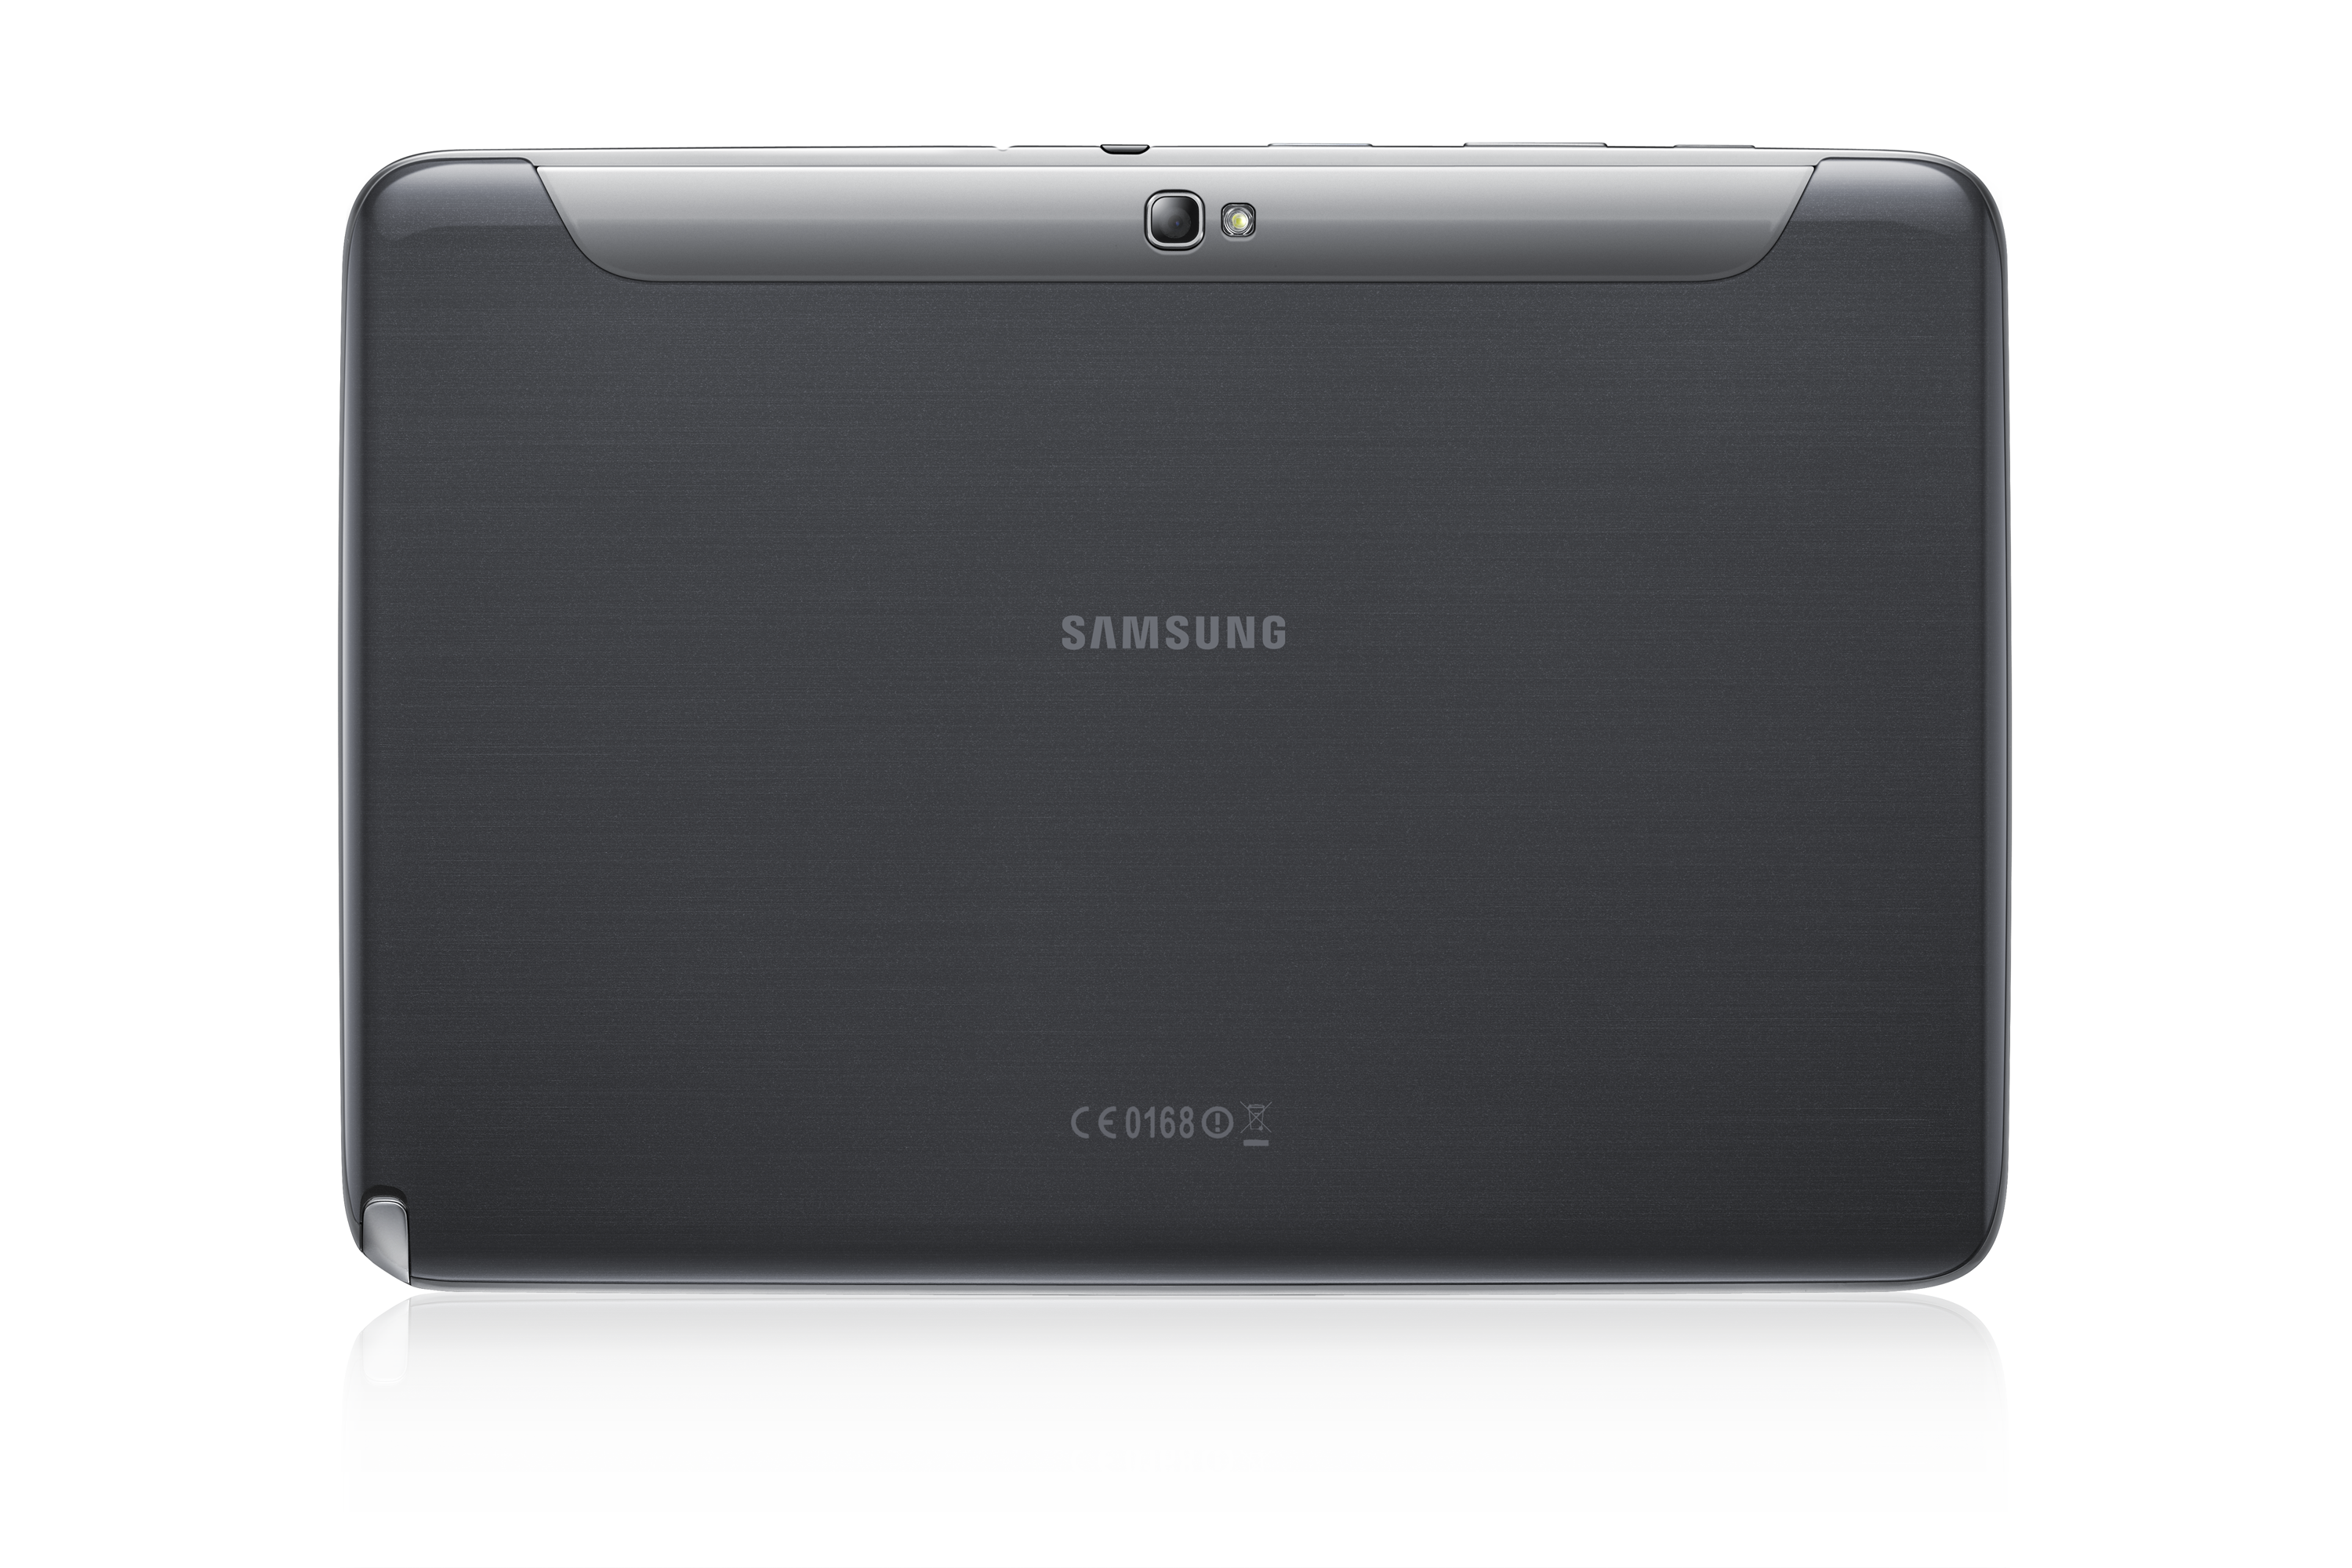 Samsung galaxy tablet 10.1 user manual download